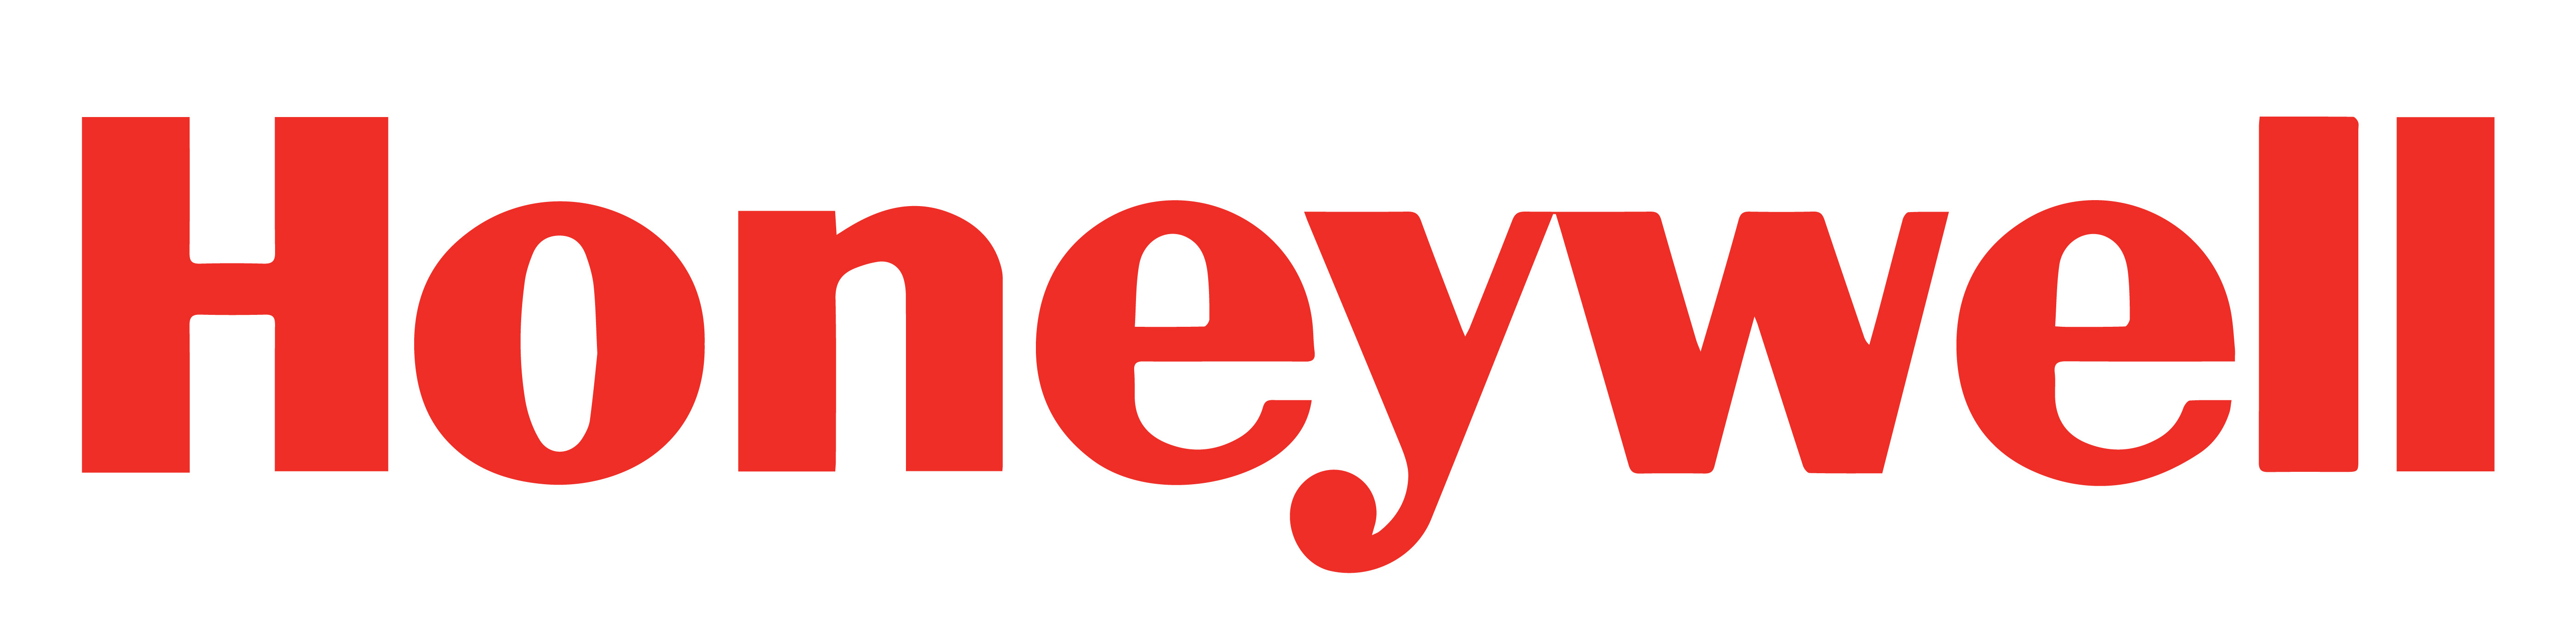 Honeywell Safety Products, Inc (США)